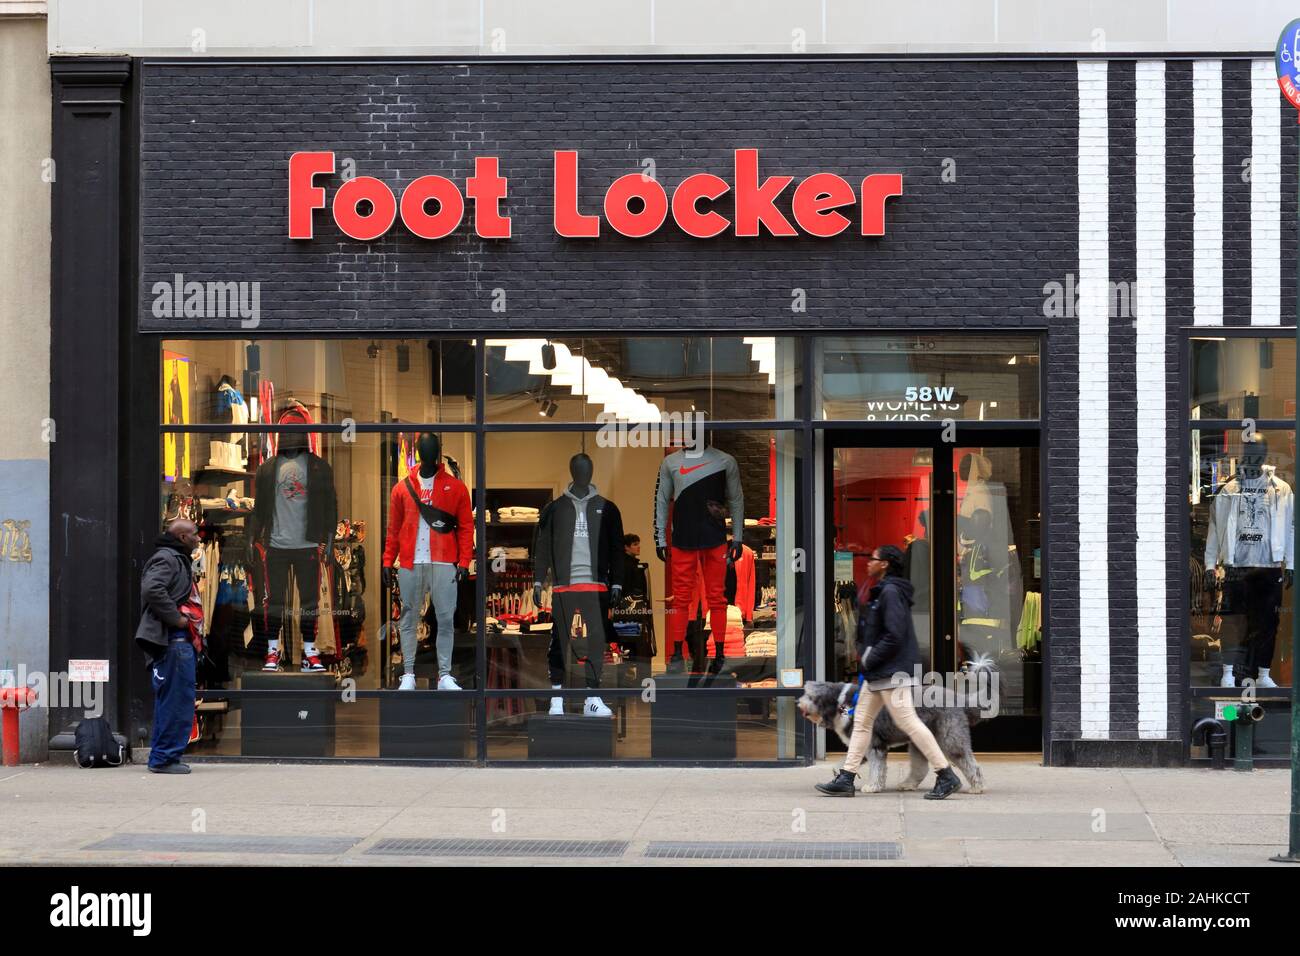 https://c8.alamy.com/comp/2AHKCCT/foot-locker-58-west-14th-street-new-york-ny-exterior-storefront-of-shoe-store-and-athletic-wear-in-manhattan-2AHKCCT.jpg